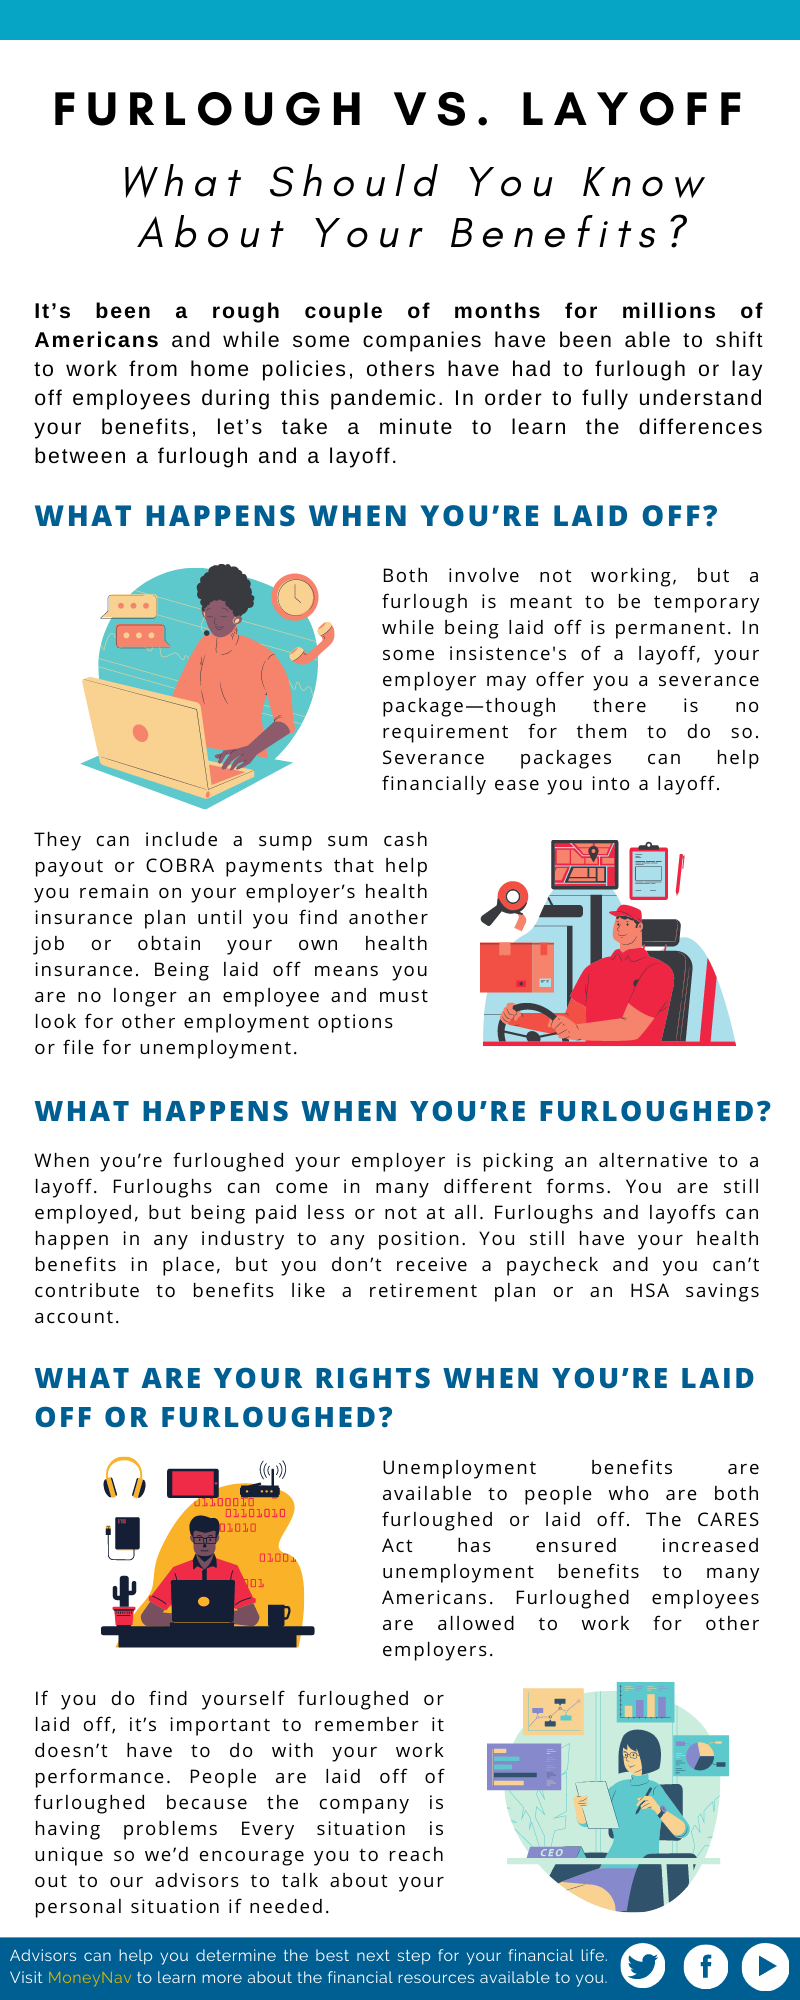 Furlough vs. Layoff infographic-1